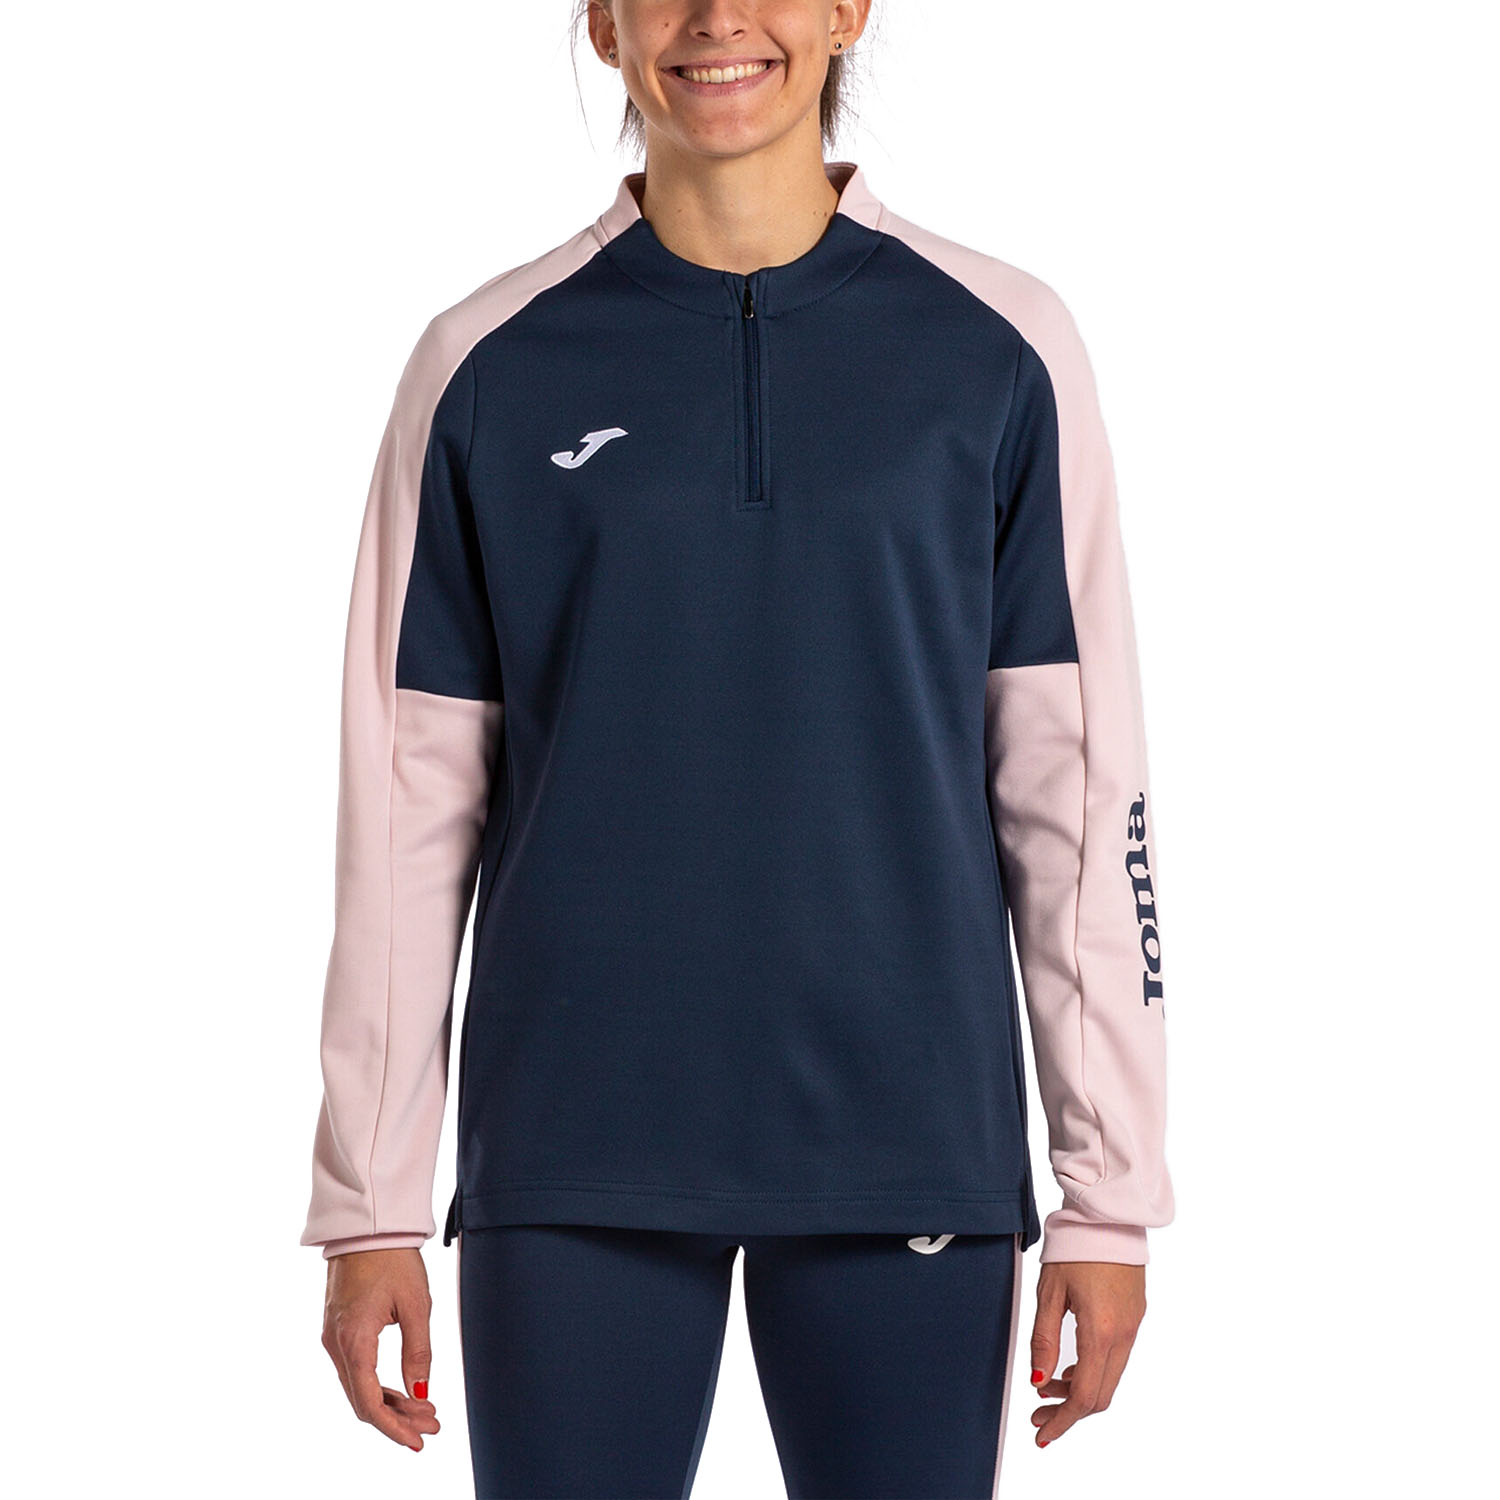 Joma Eco Championship Shirt - Navy/Pink